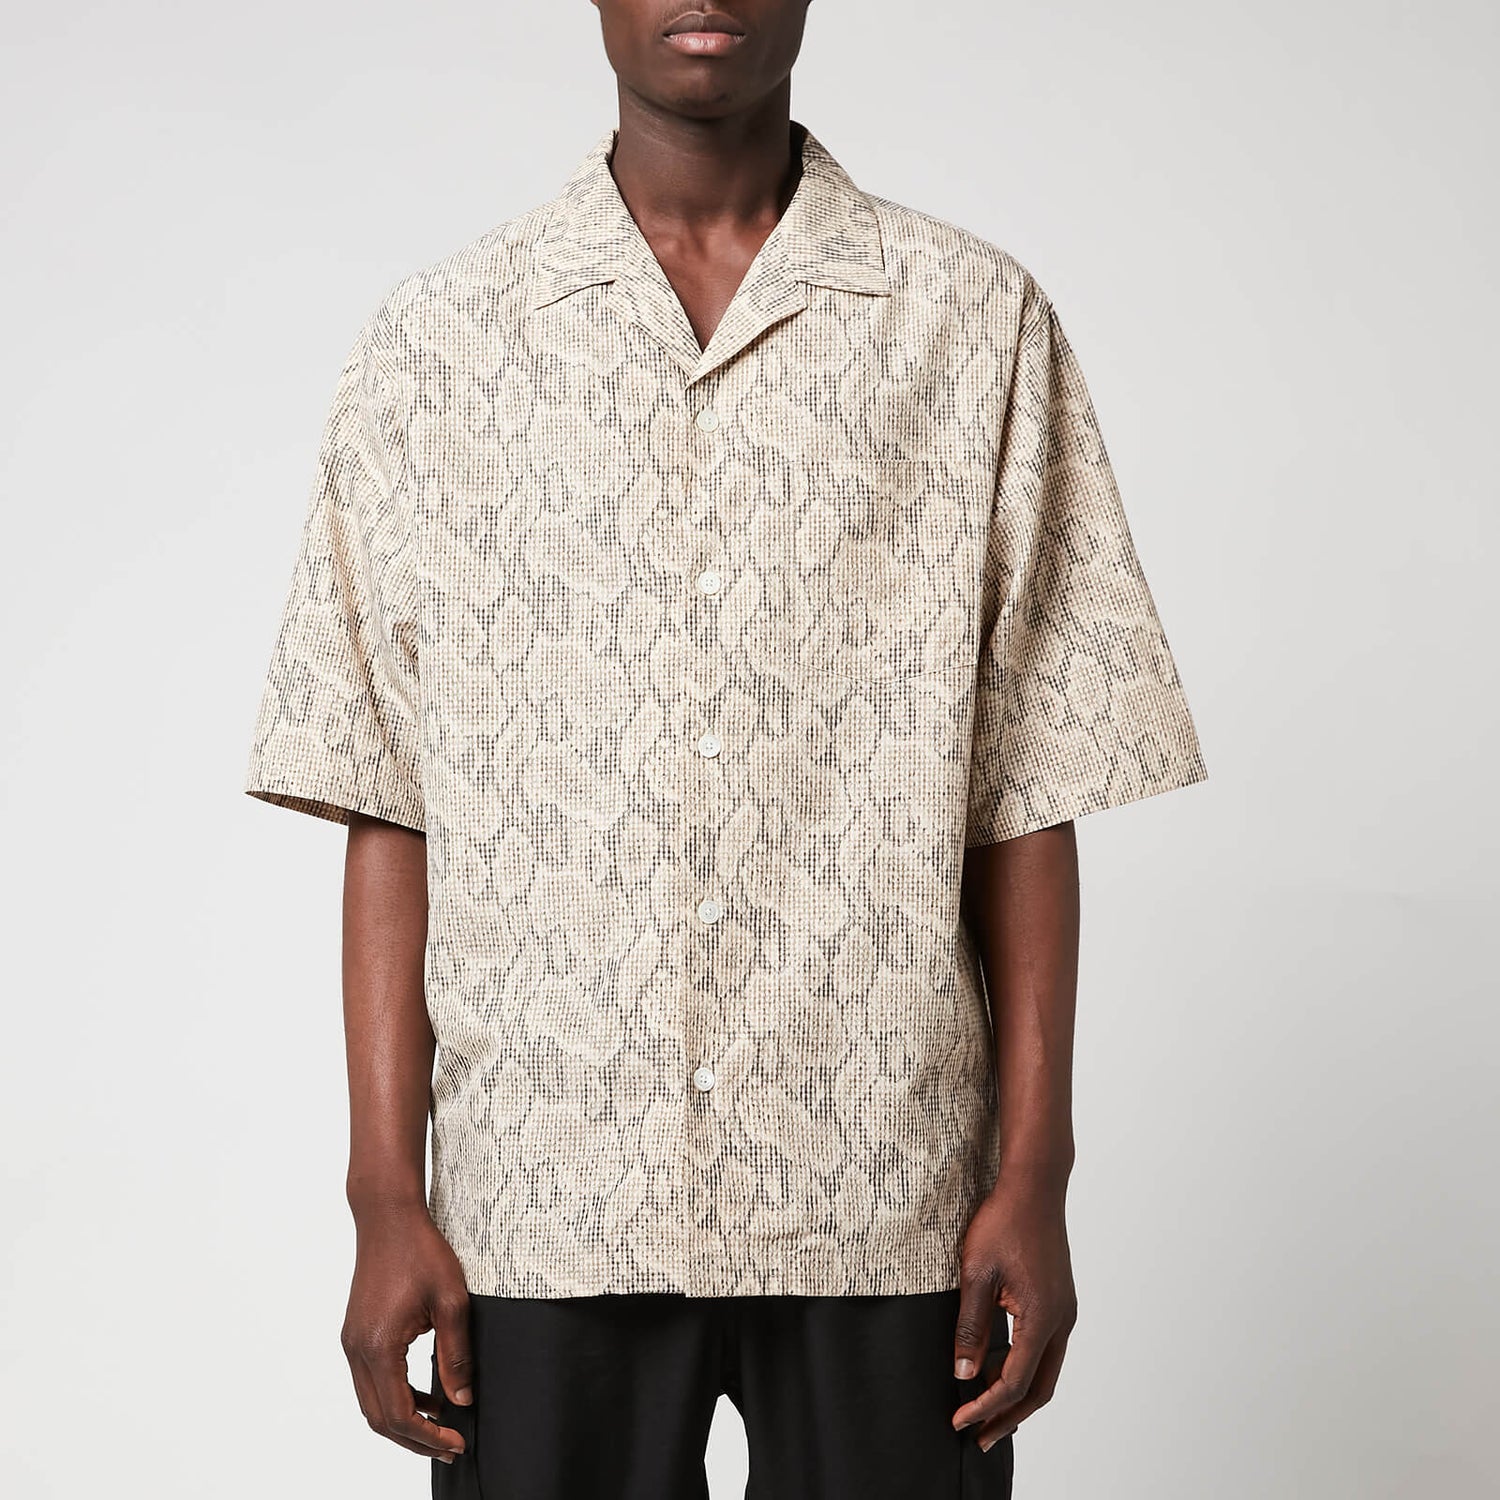 KENZO Men's Casual Short Sleeves Shirt - Camel - M